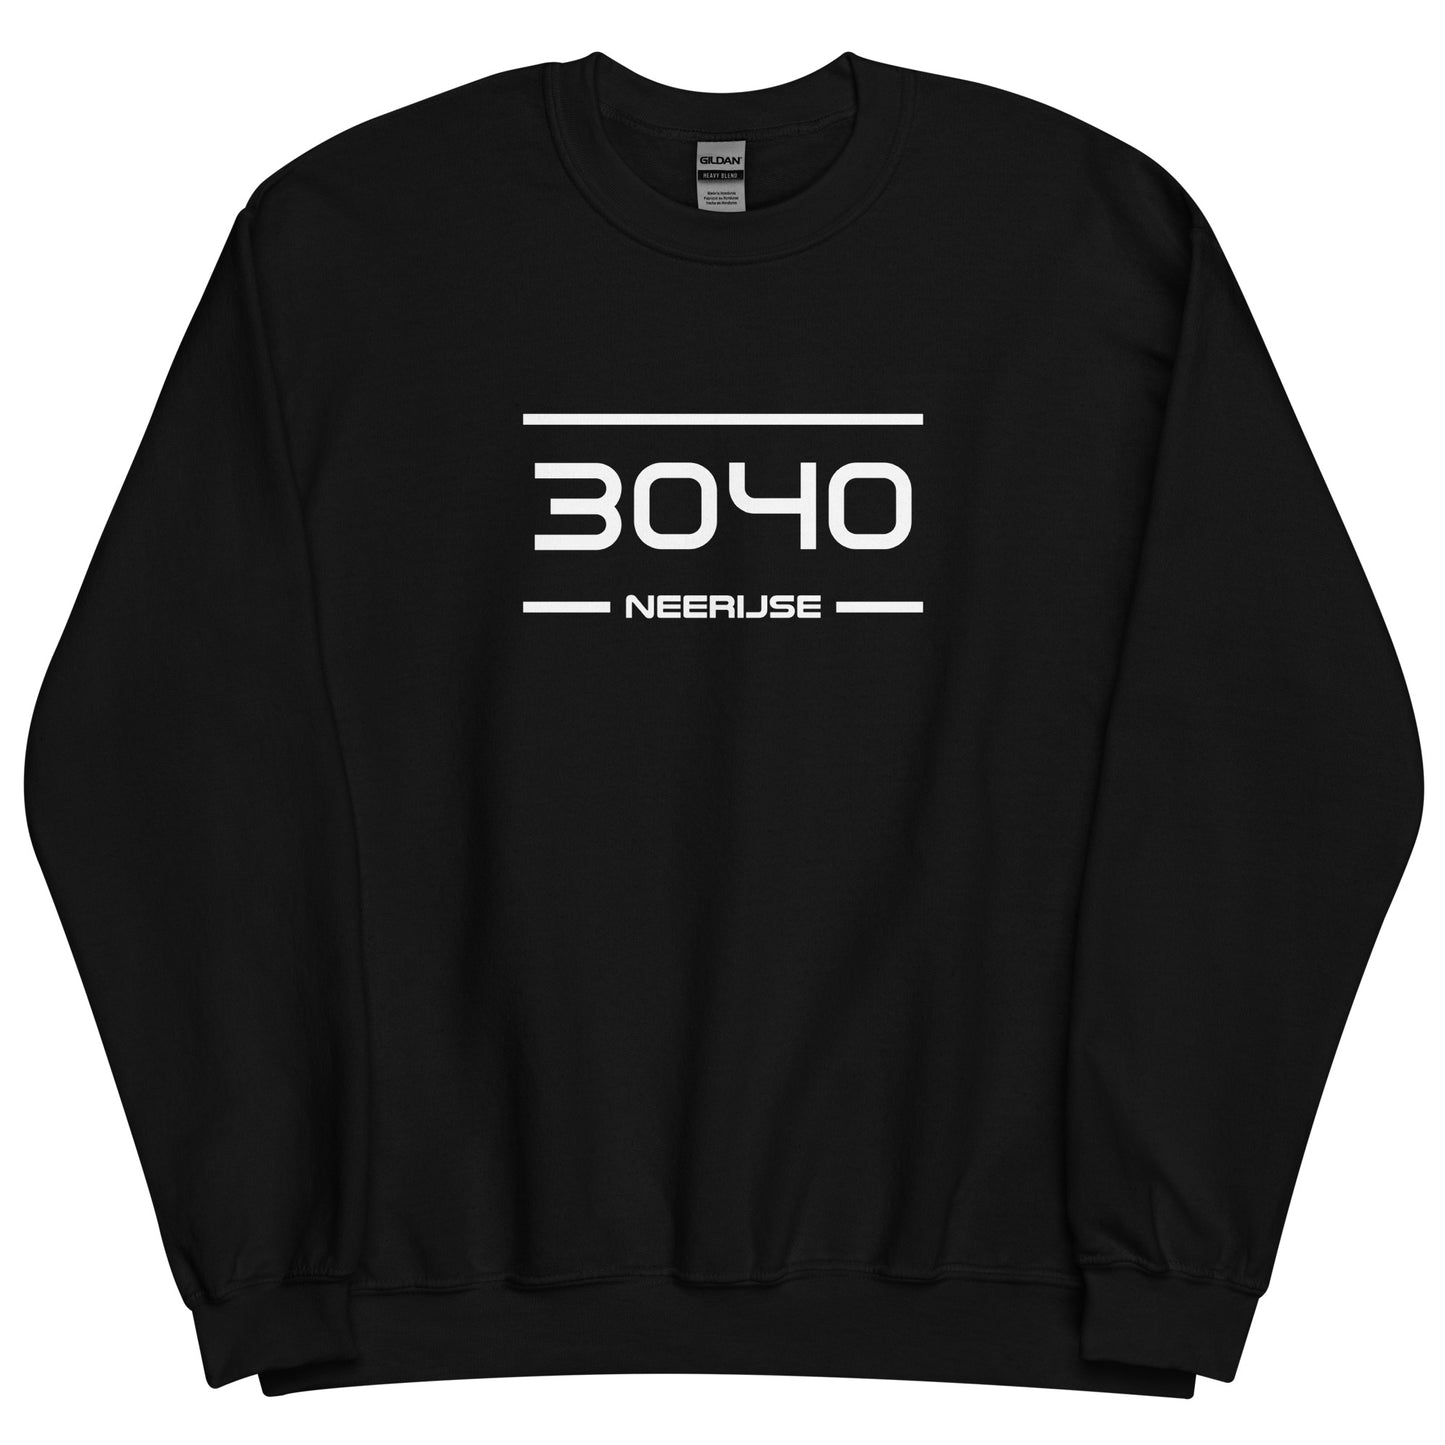 Sweater - 3040 - Neerijse (M/V)